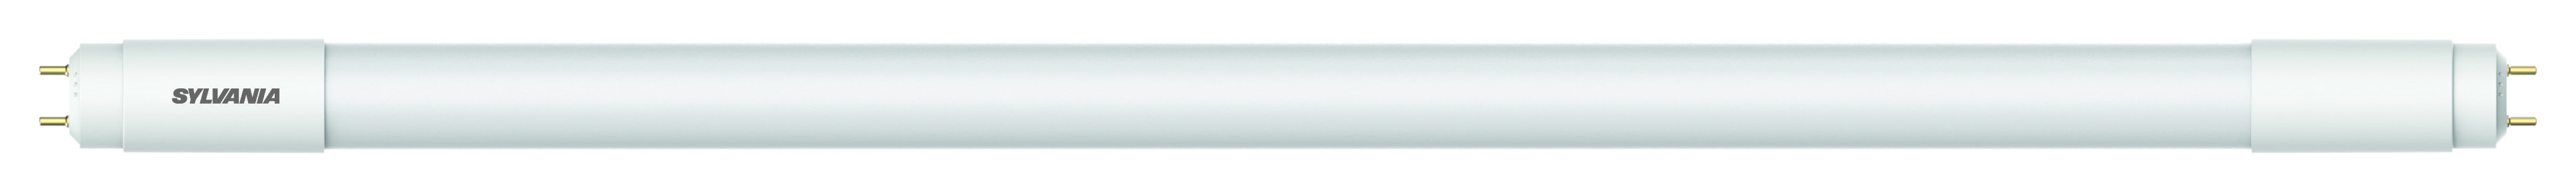 Image of Sylvania 5ft T8 Cool White LED Universal Tube Light